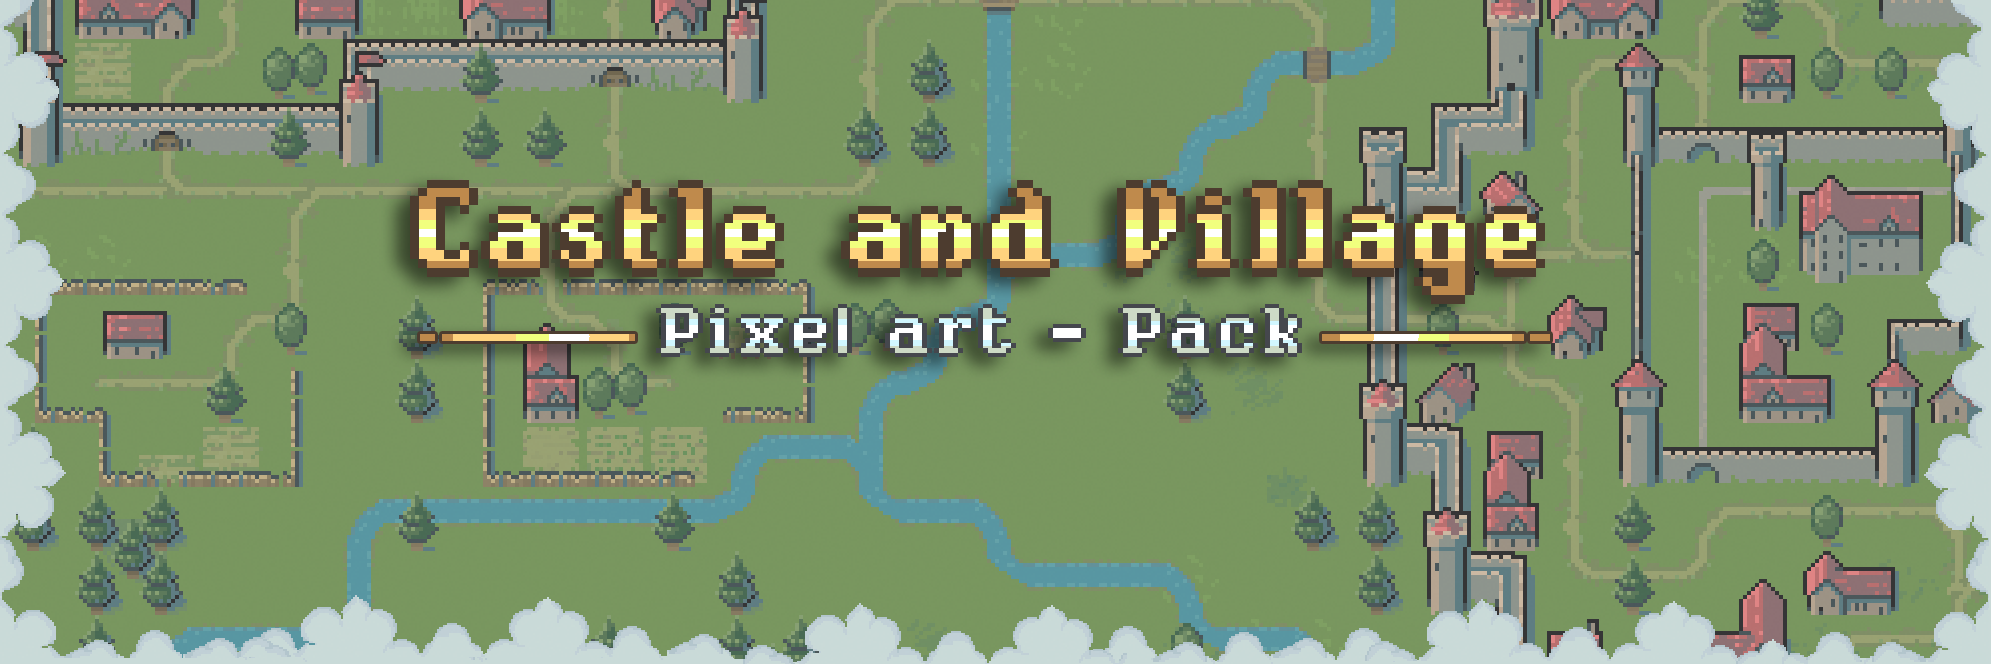 Castle and village - Pixel art pack